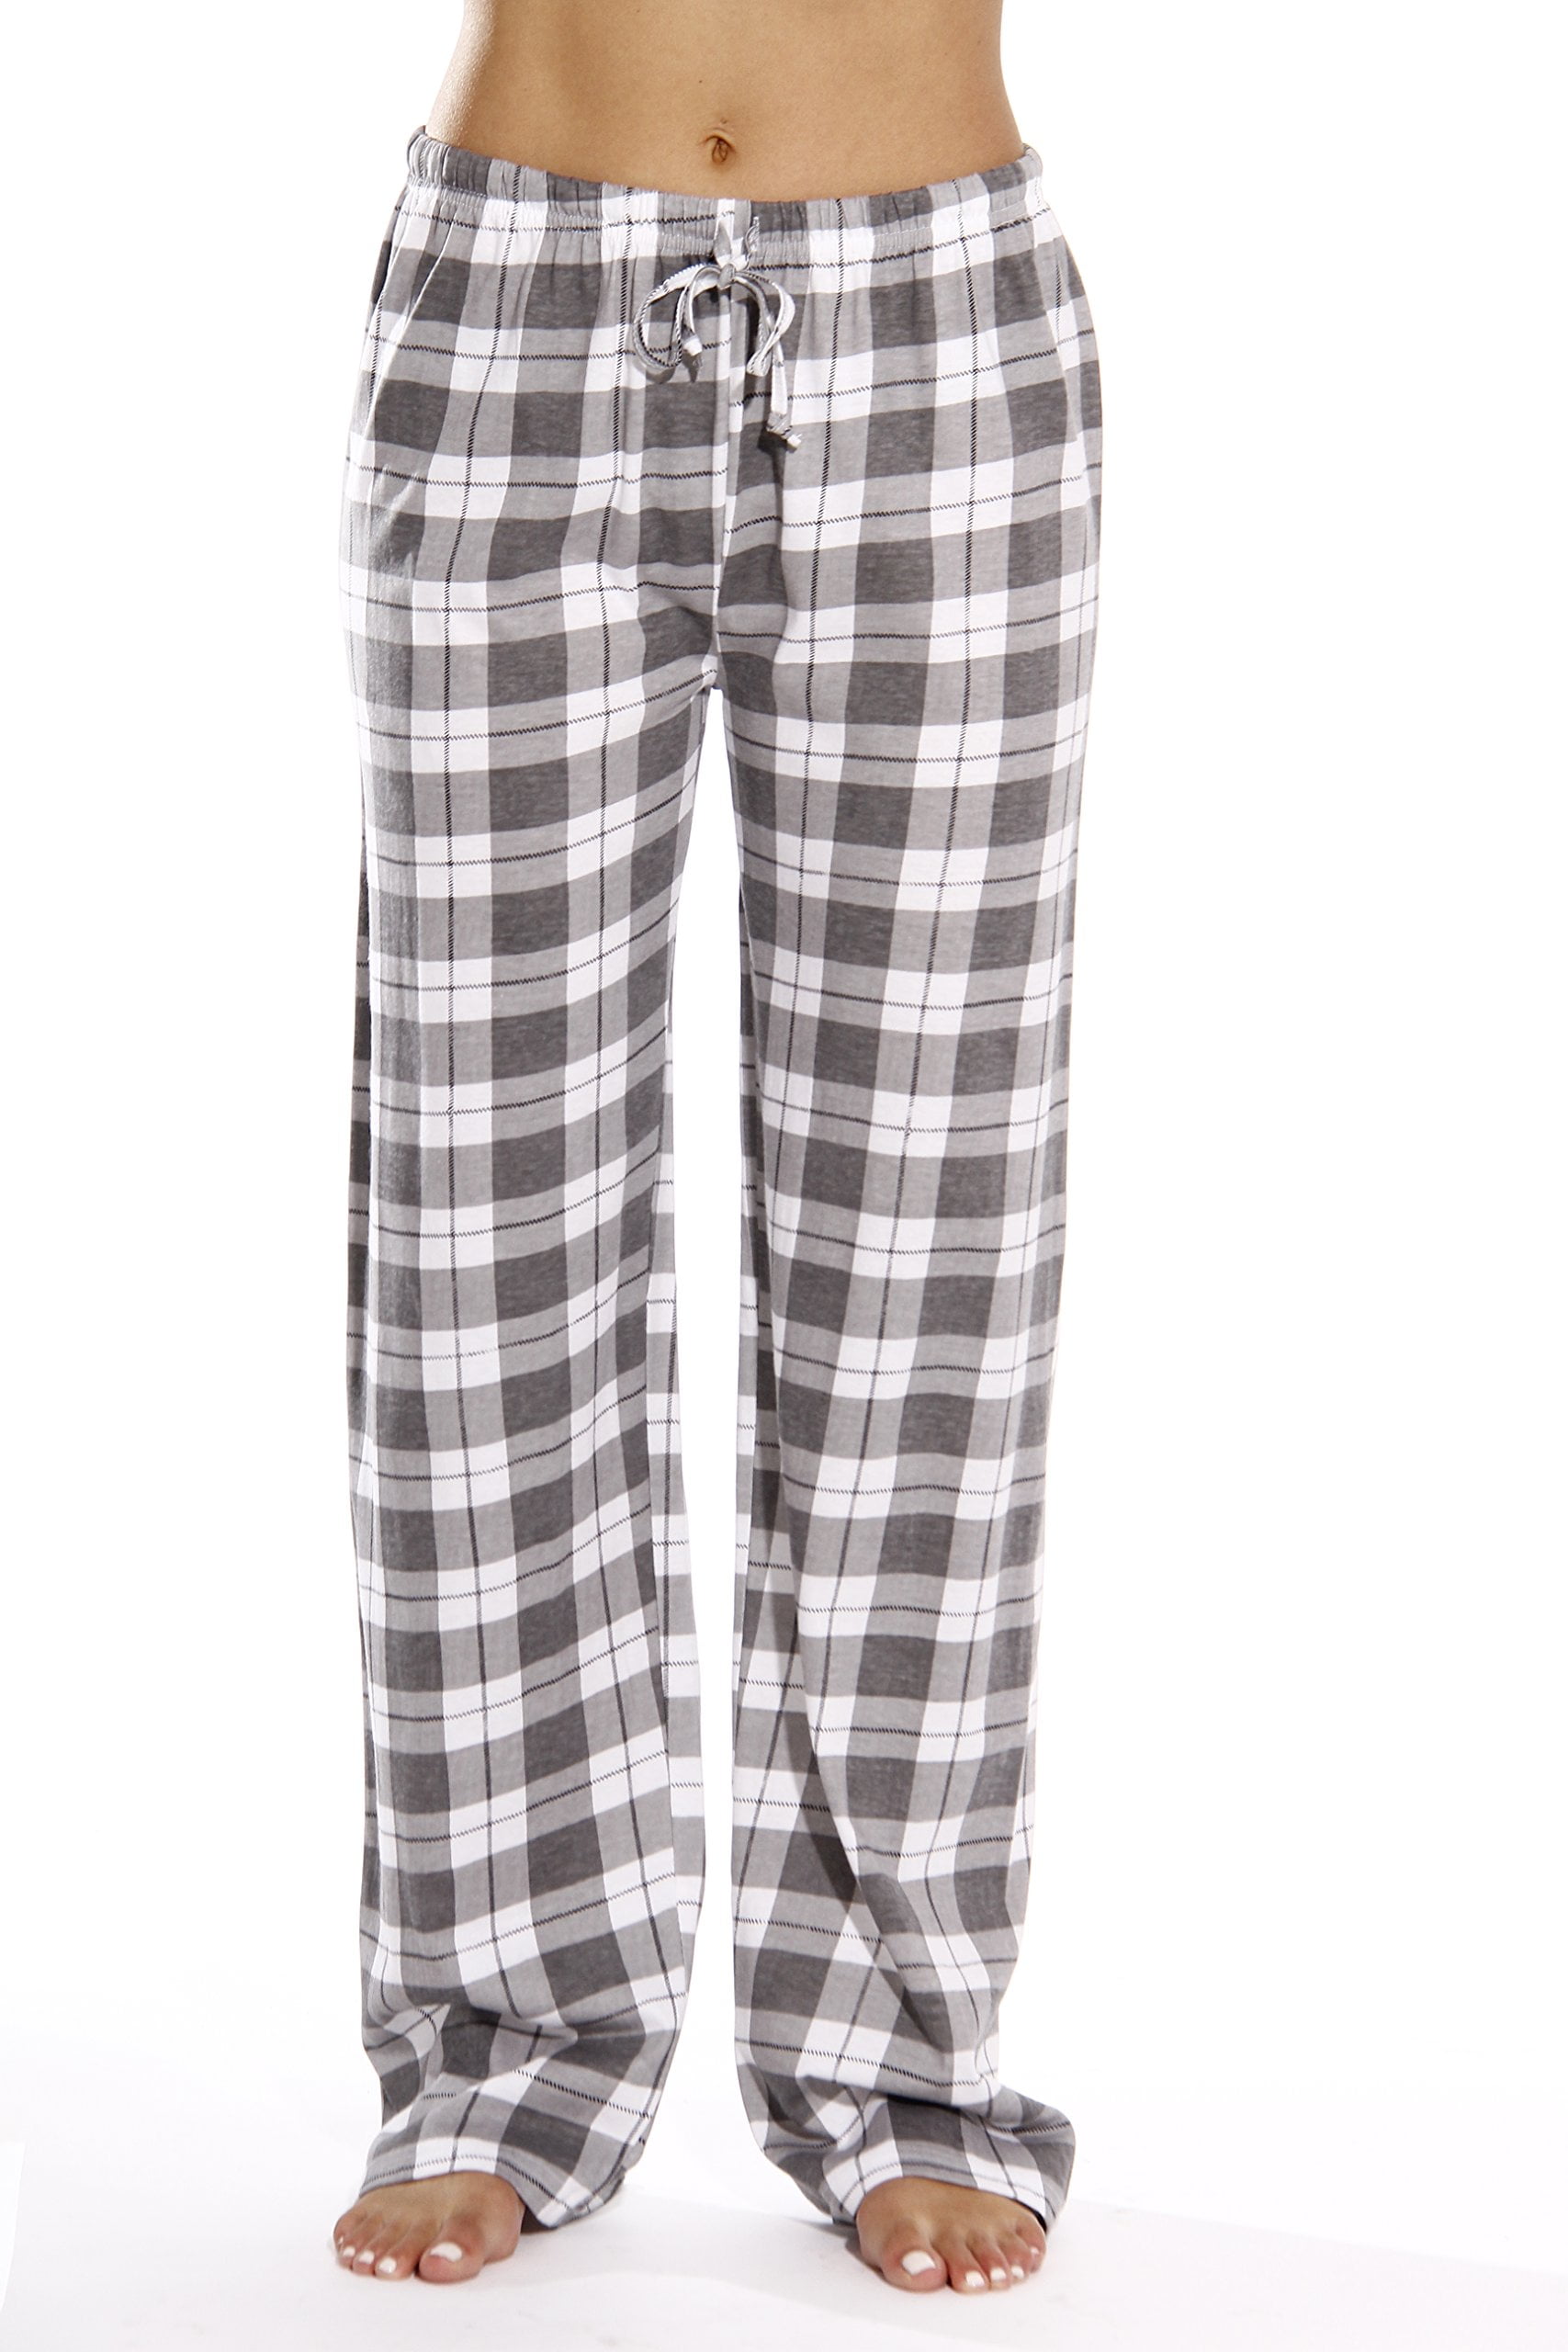 Just Love Women's Plaid Pajama Pants in 100% Cotton Jersey - Comfortable  Sleepwear for Women (Grey - Plaid, 3X)